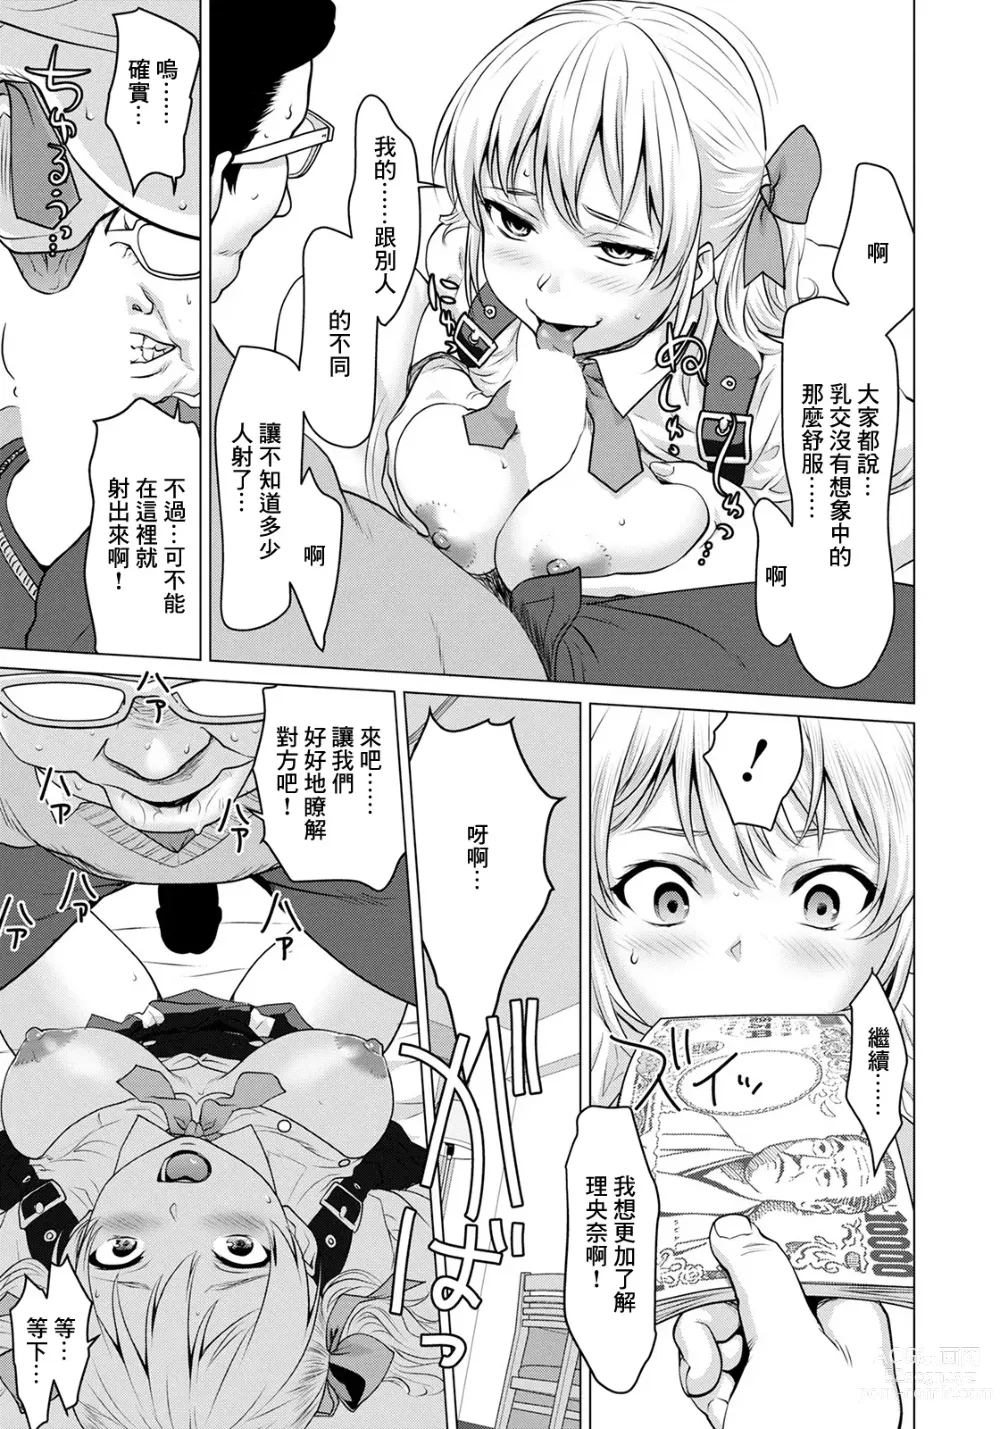 Page 9 of manga Papakatsu no Hime